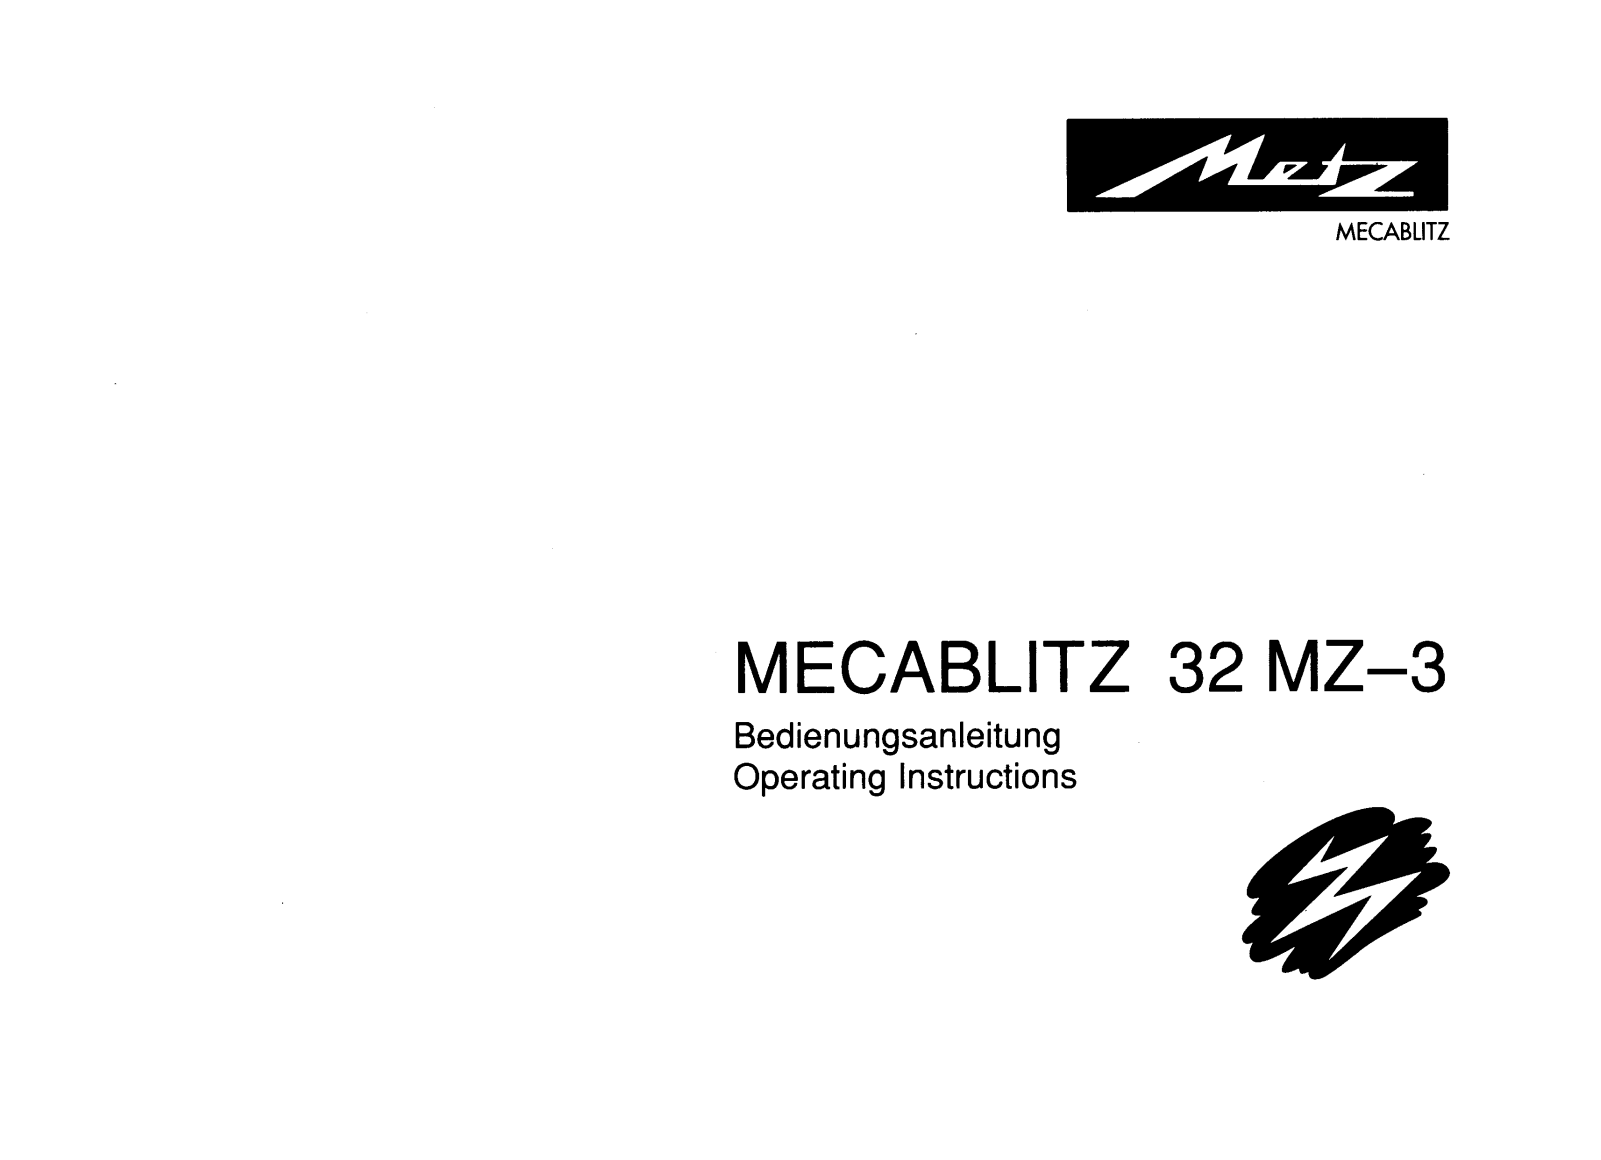 METZ Mecablitz 32 MZ-3 User Manual